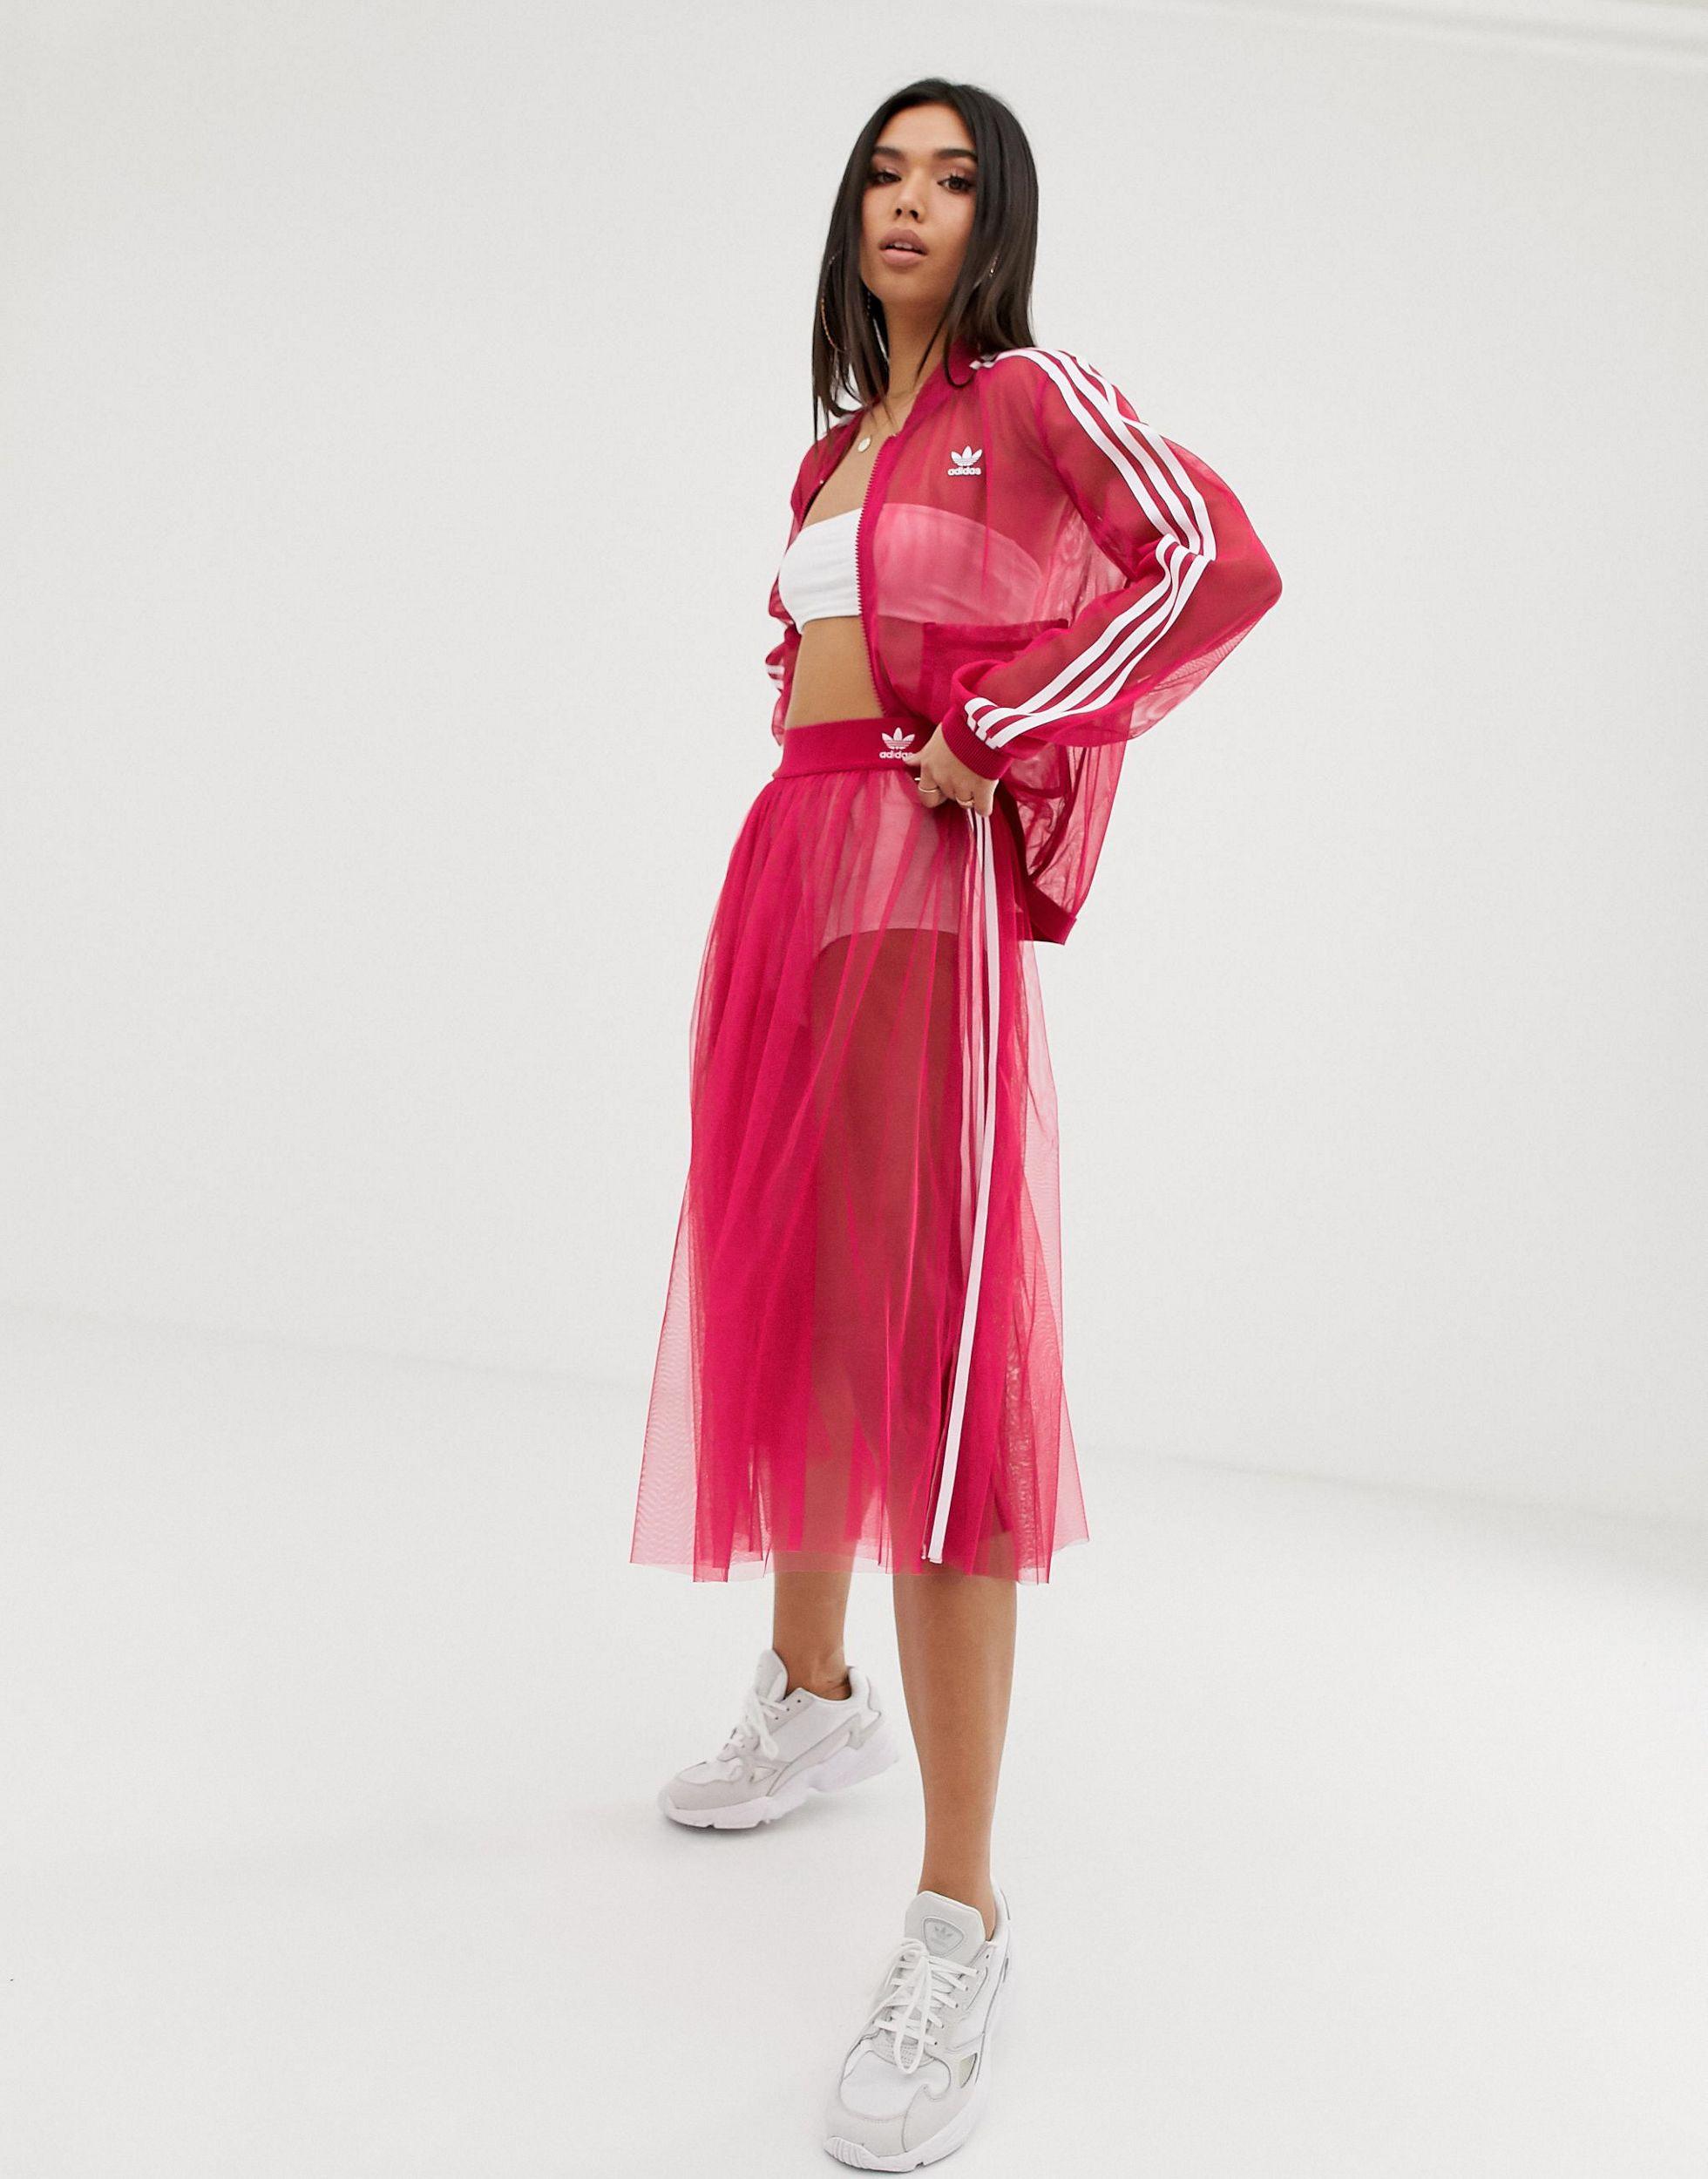 adidas Originals Sleek Three Stripe Mesh Tulle Skirt in Pink | Lyst Canada